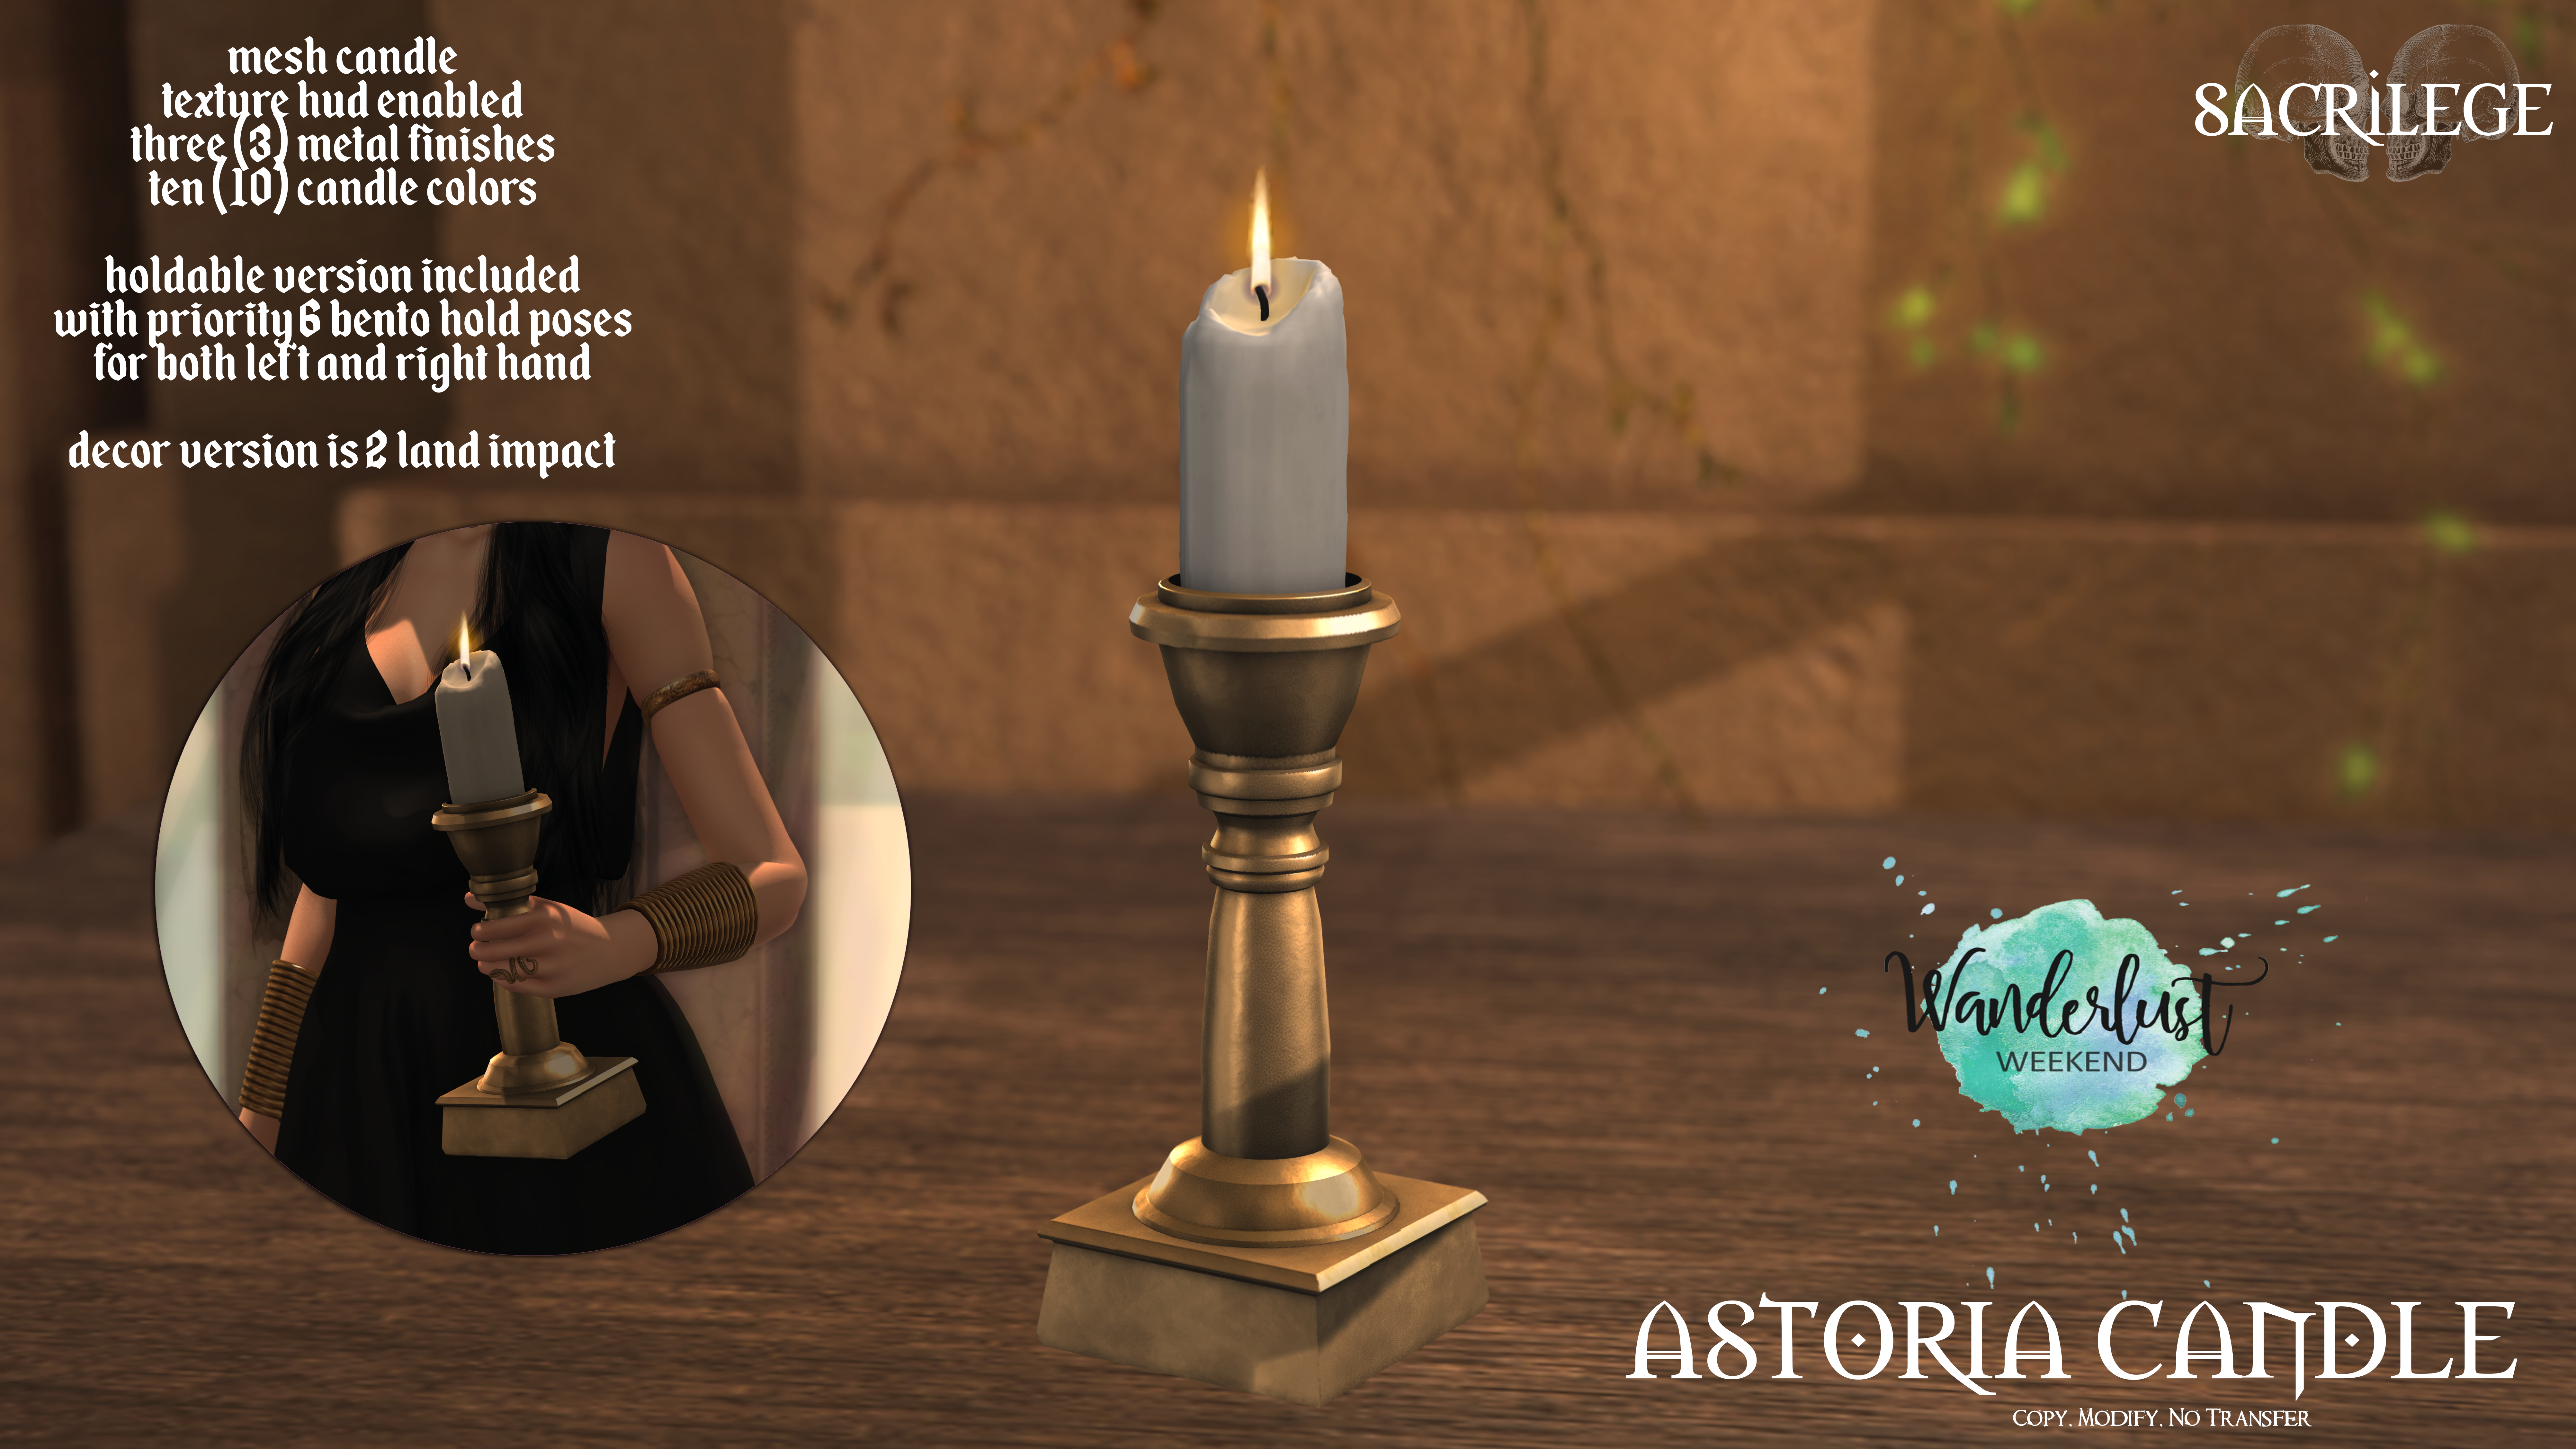 Sacrilege – Astoria Candle